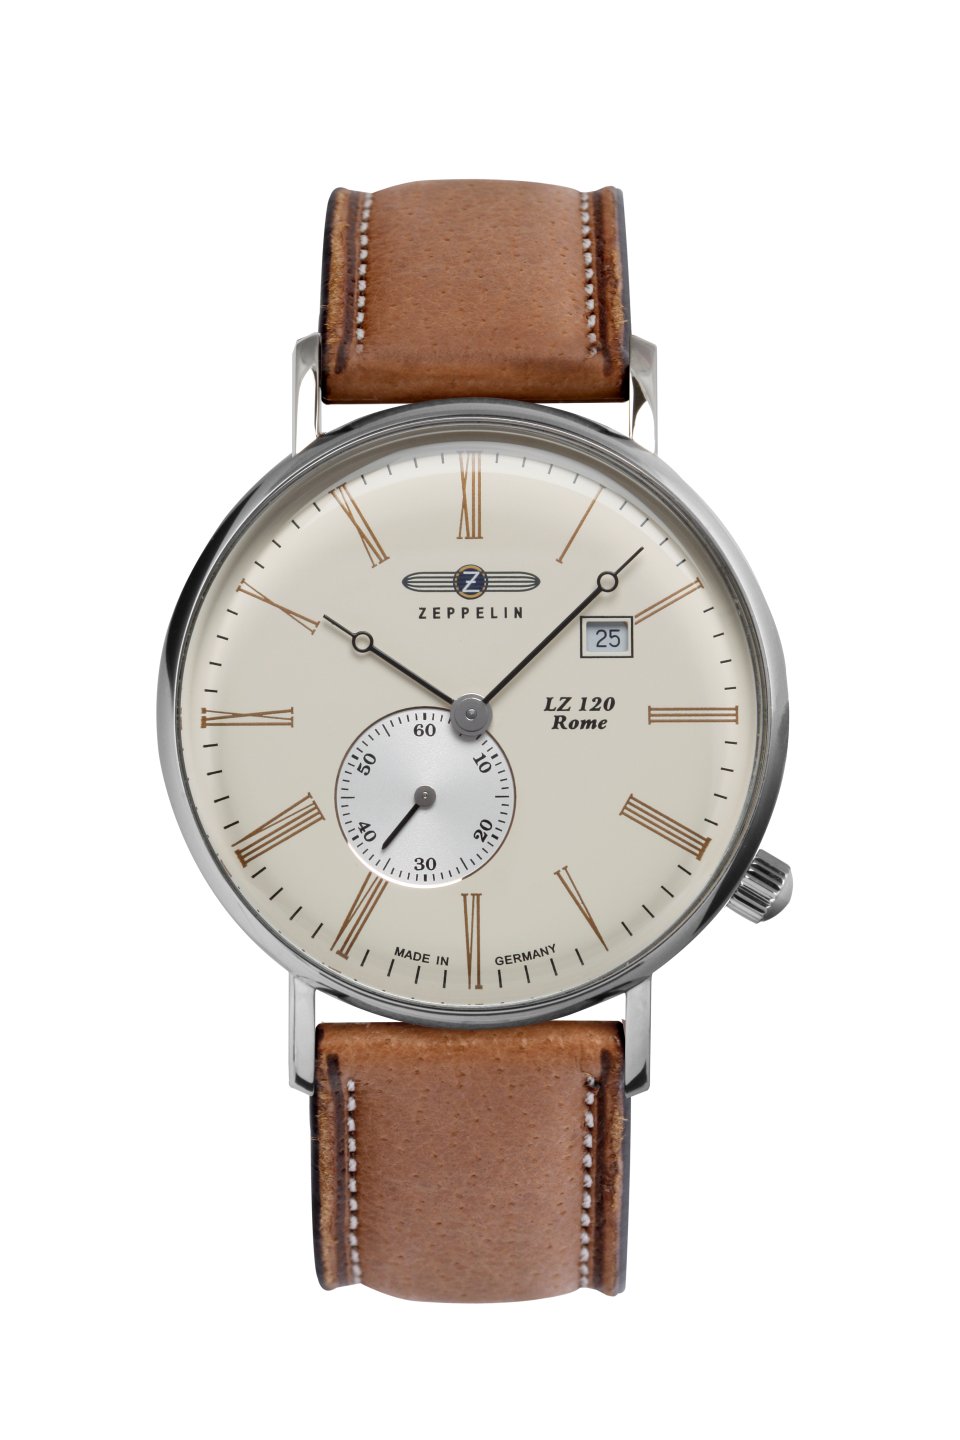 POINTtec-Uhr-Watch-zeppelin-7134-5